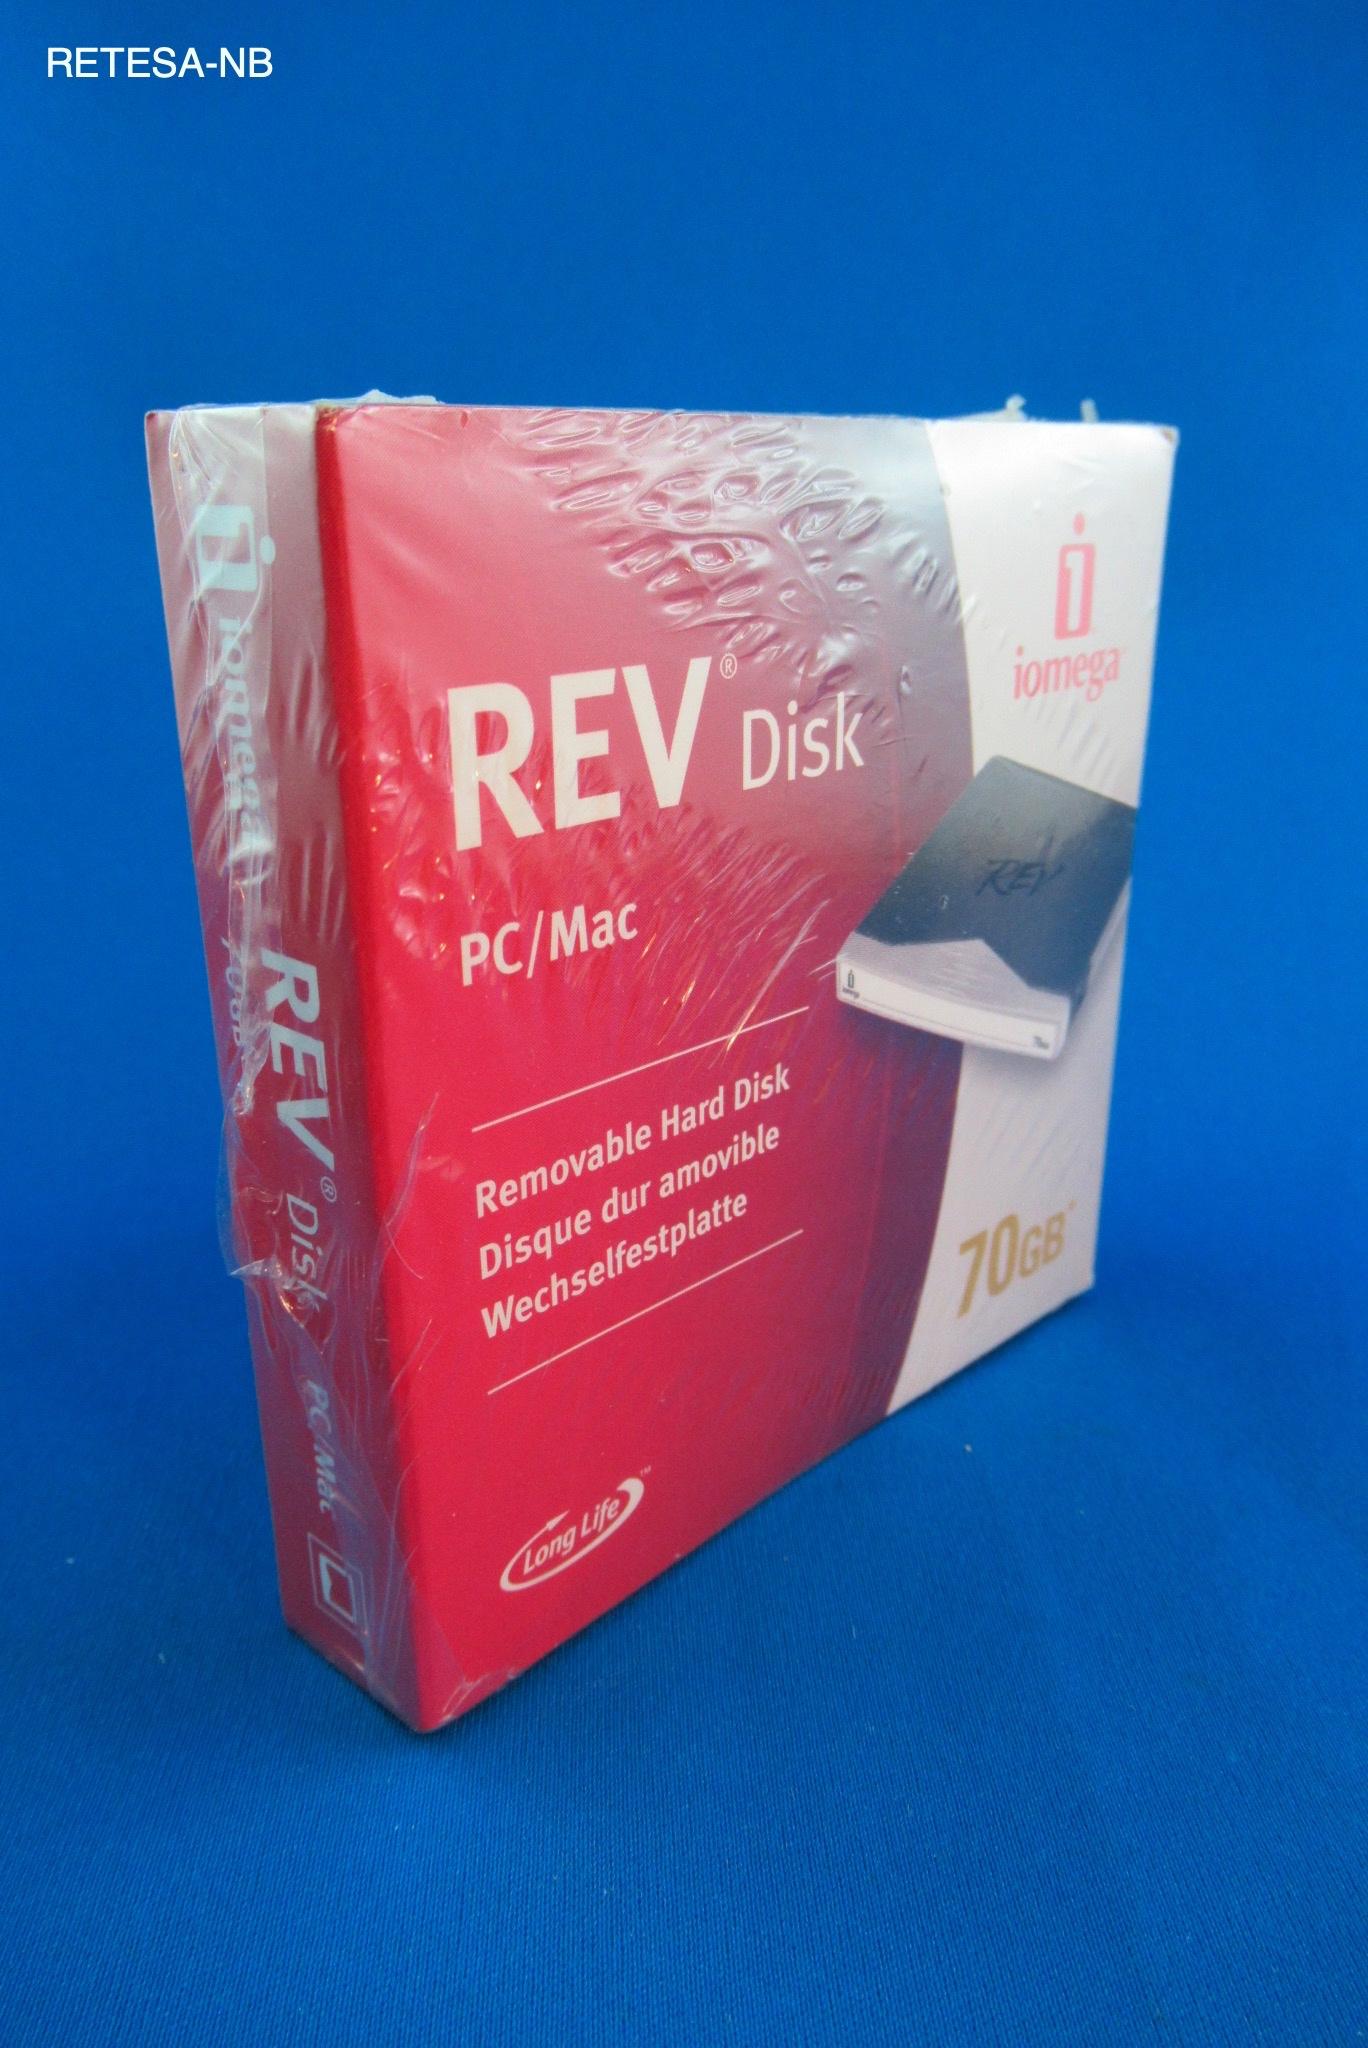 REV-Disk 70/140 GB PC-formatiert IOMEGA 33507